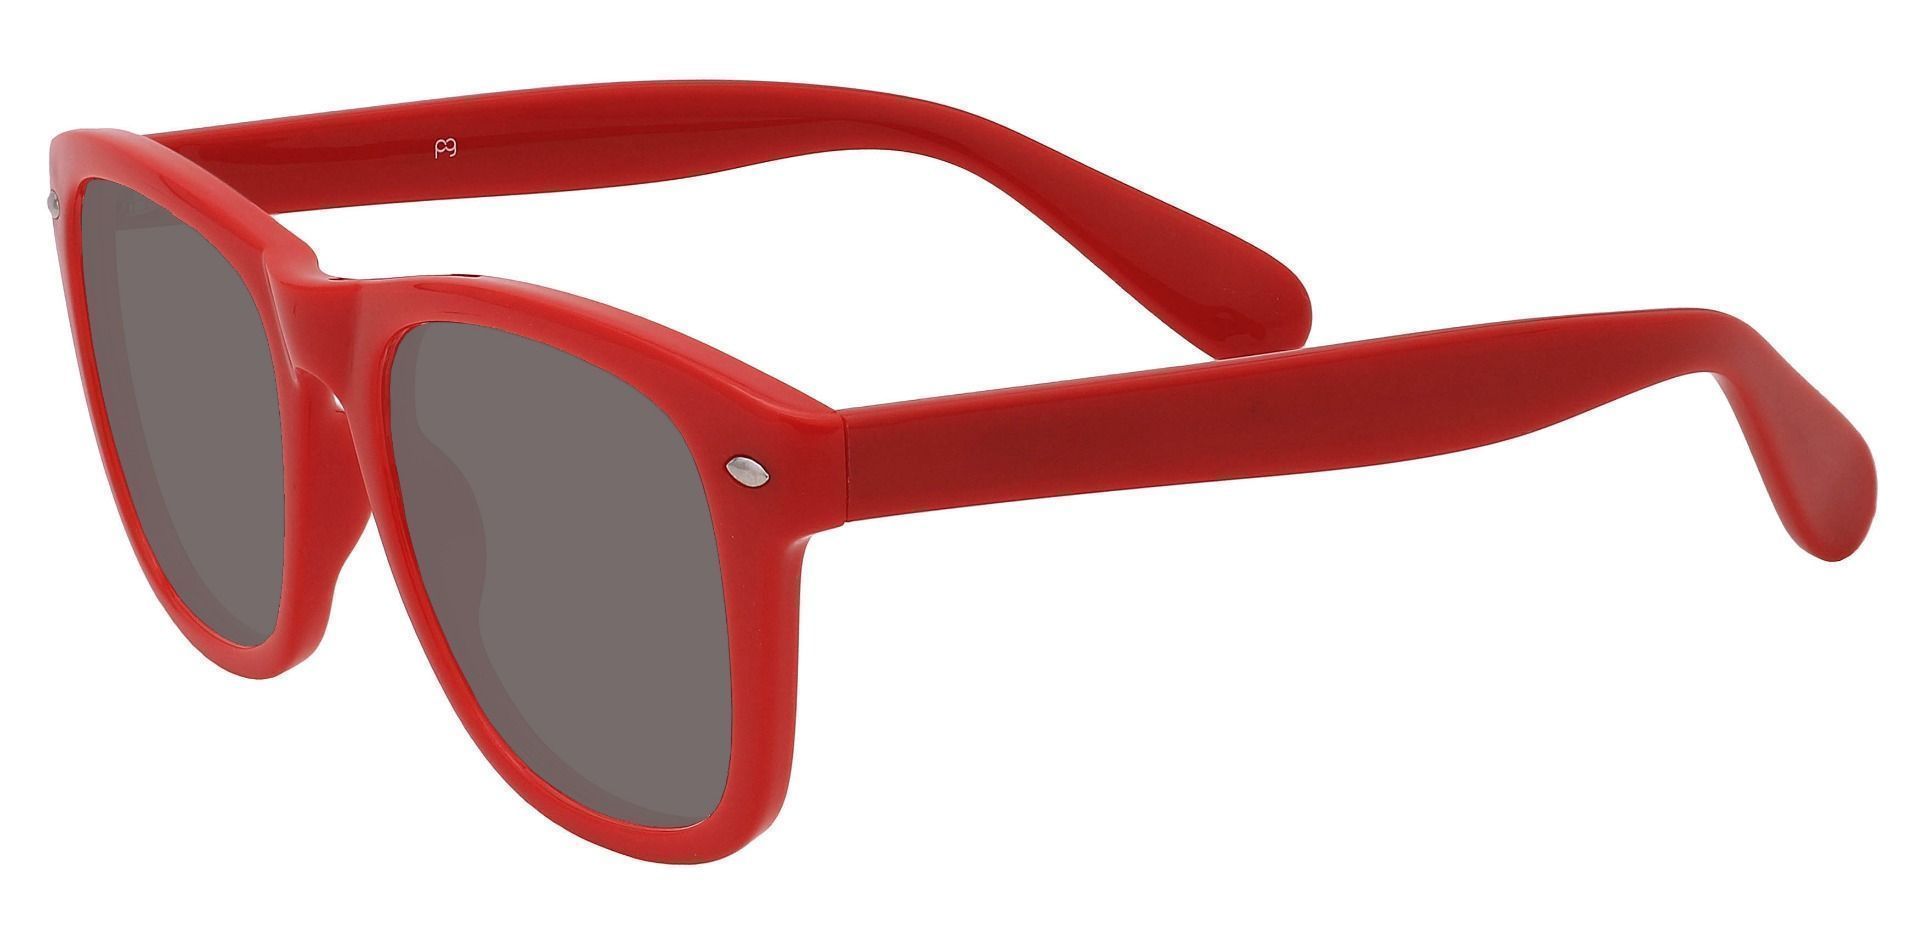 Yolanda Square Prescription Sunglasses - Red Frame With Gray Lenses